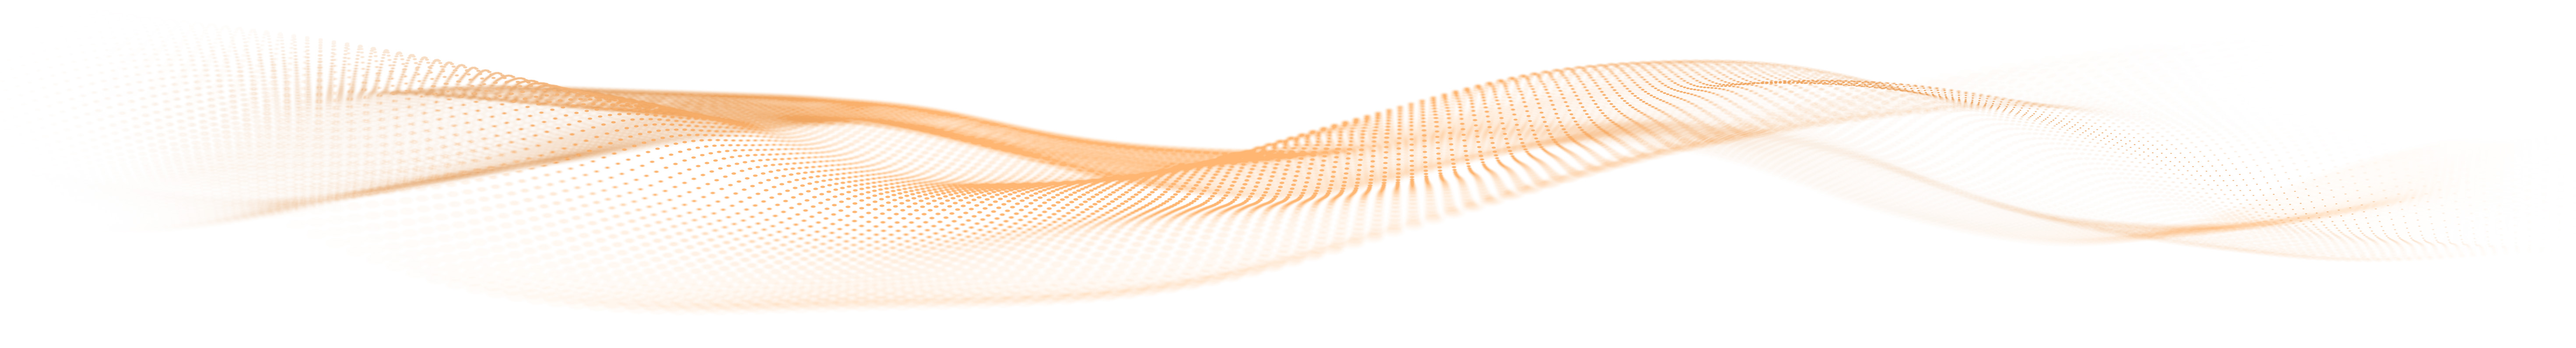 Turuncu Renkli Parçacık Dalga Grafiği